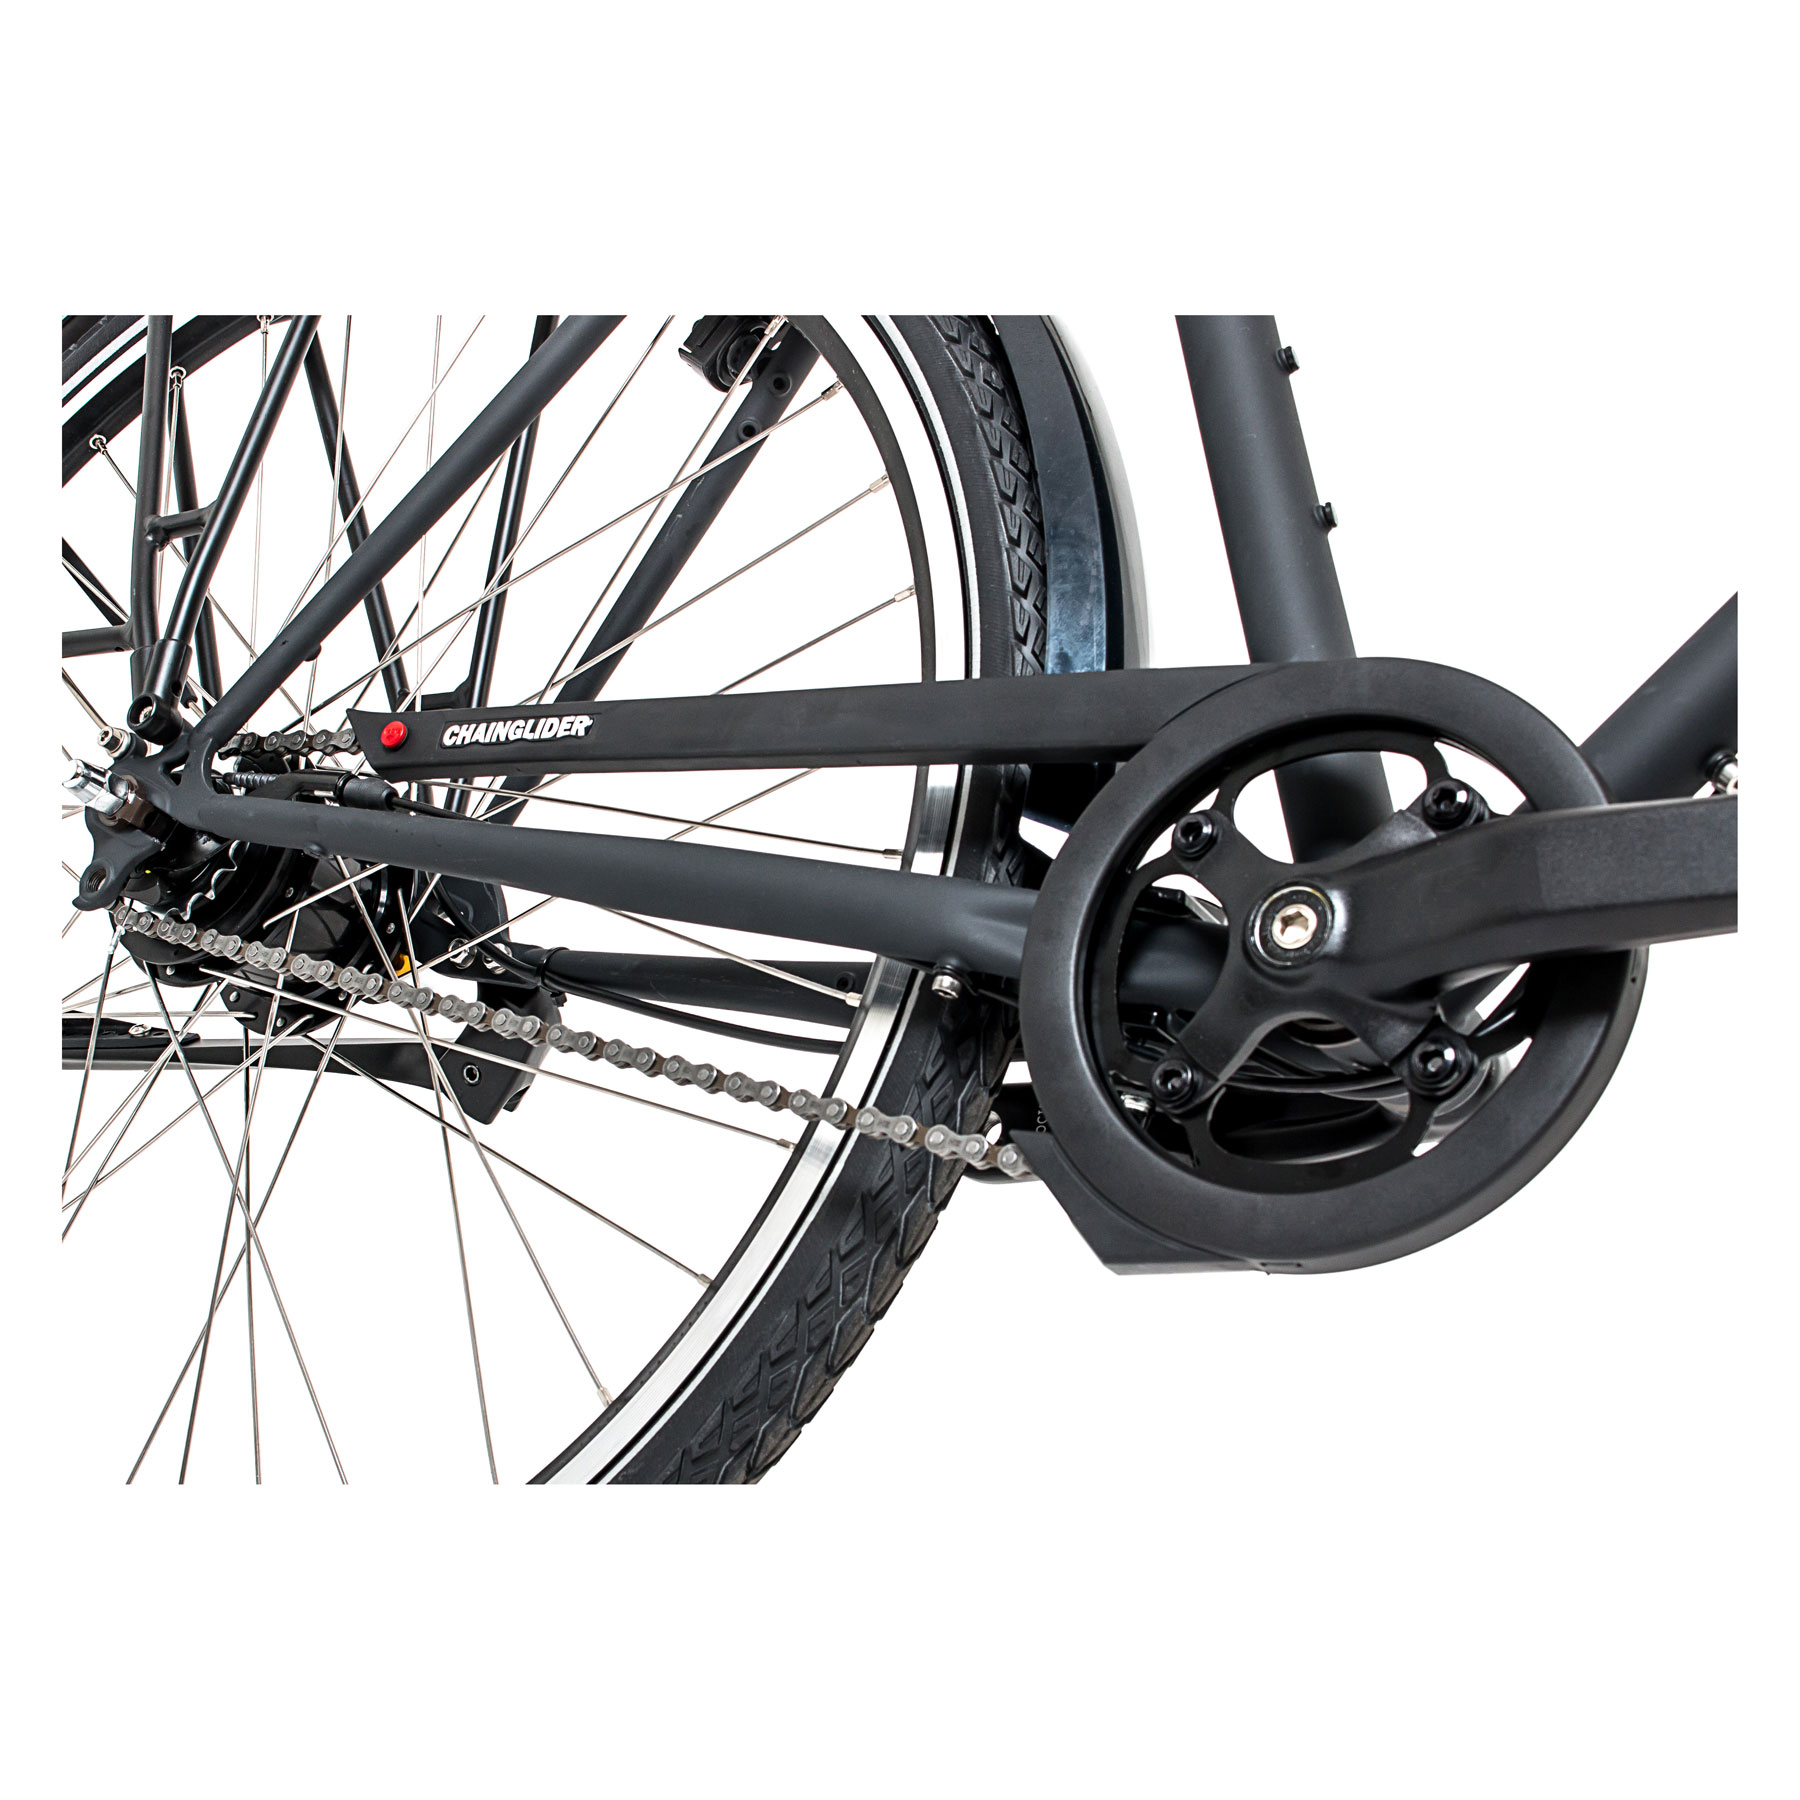 Supermarkt bevel Geavanceerde Hebie 350 Bicycle Chain Glider designed to trap dirt / grime